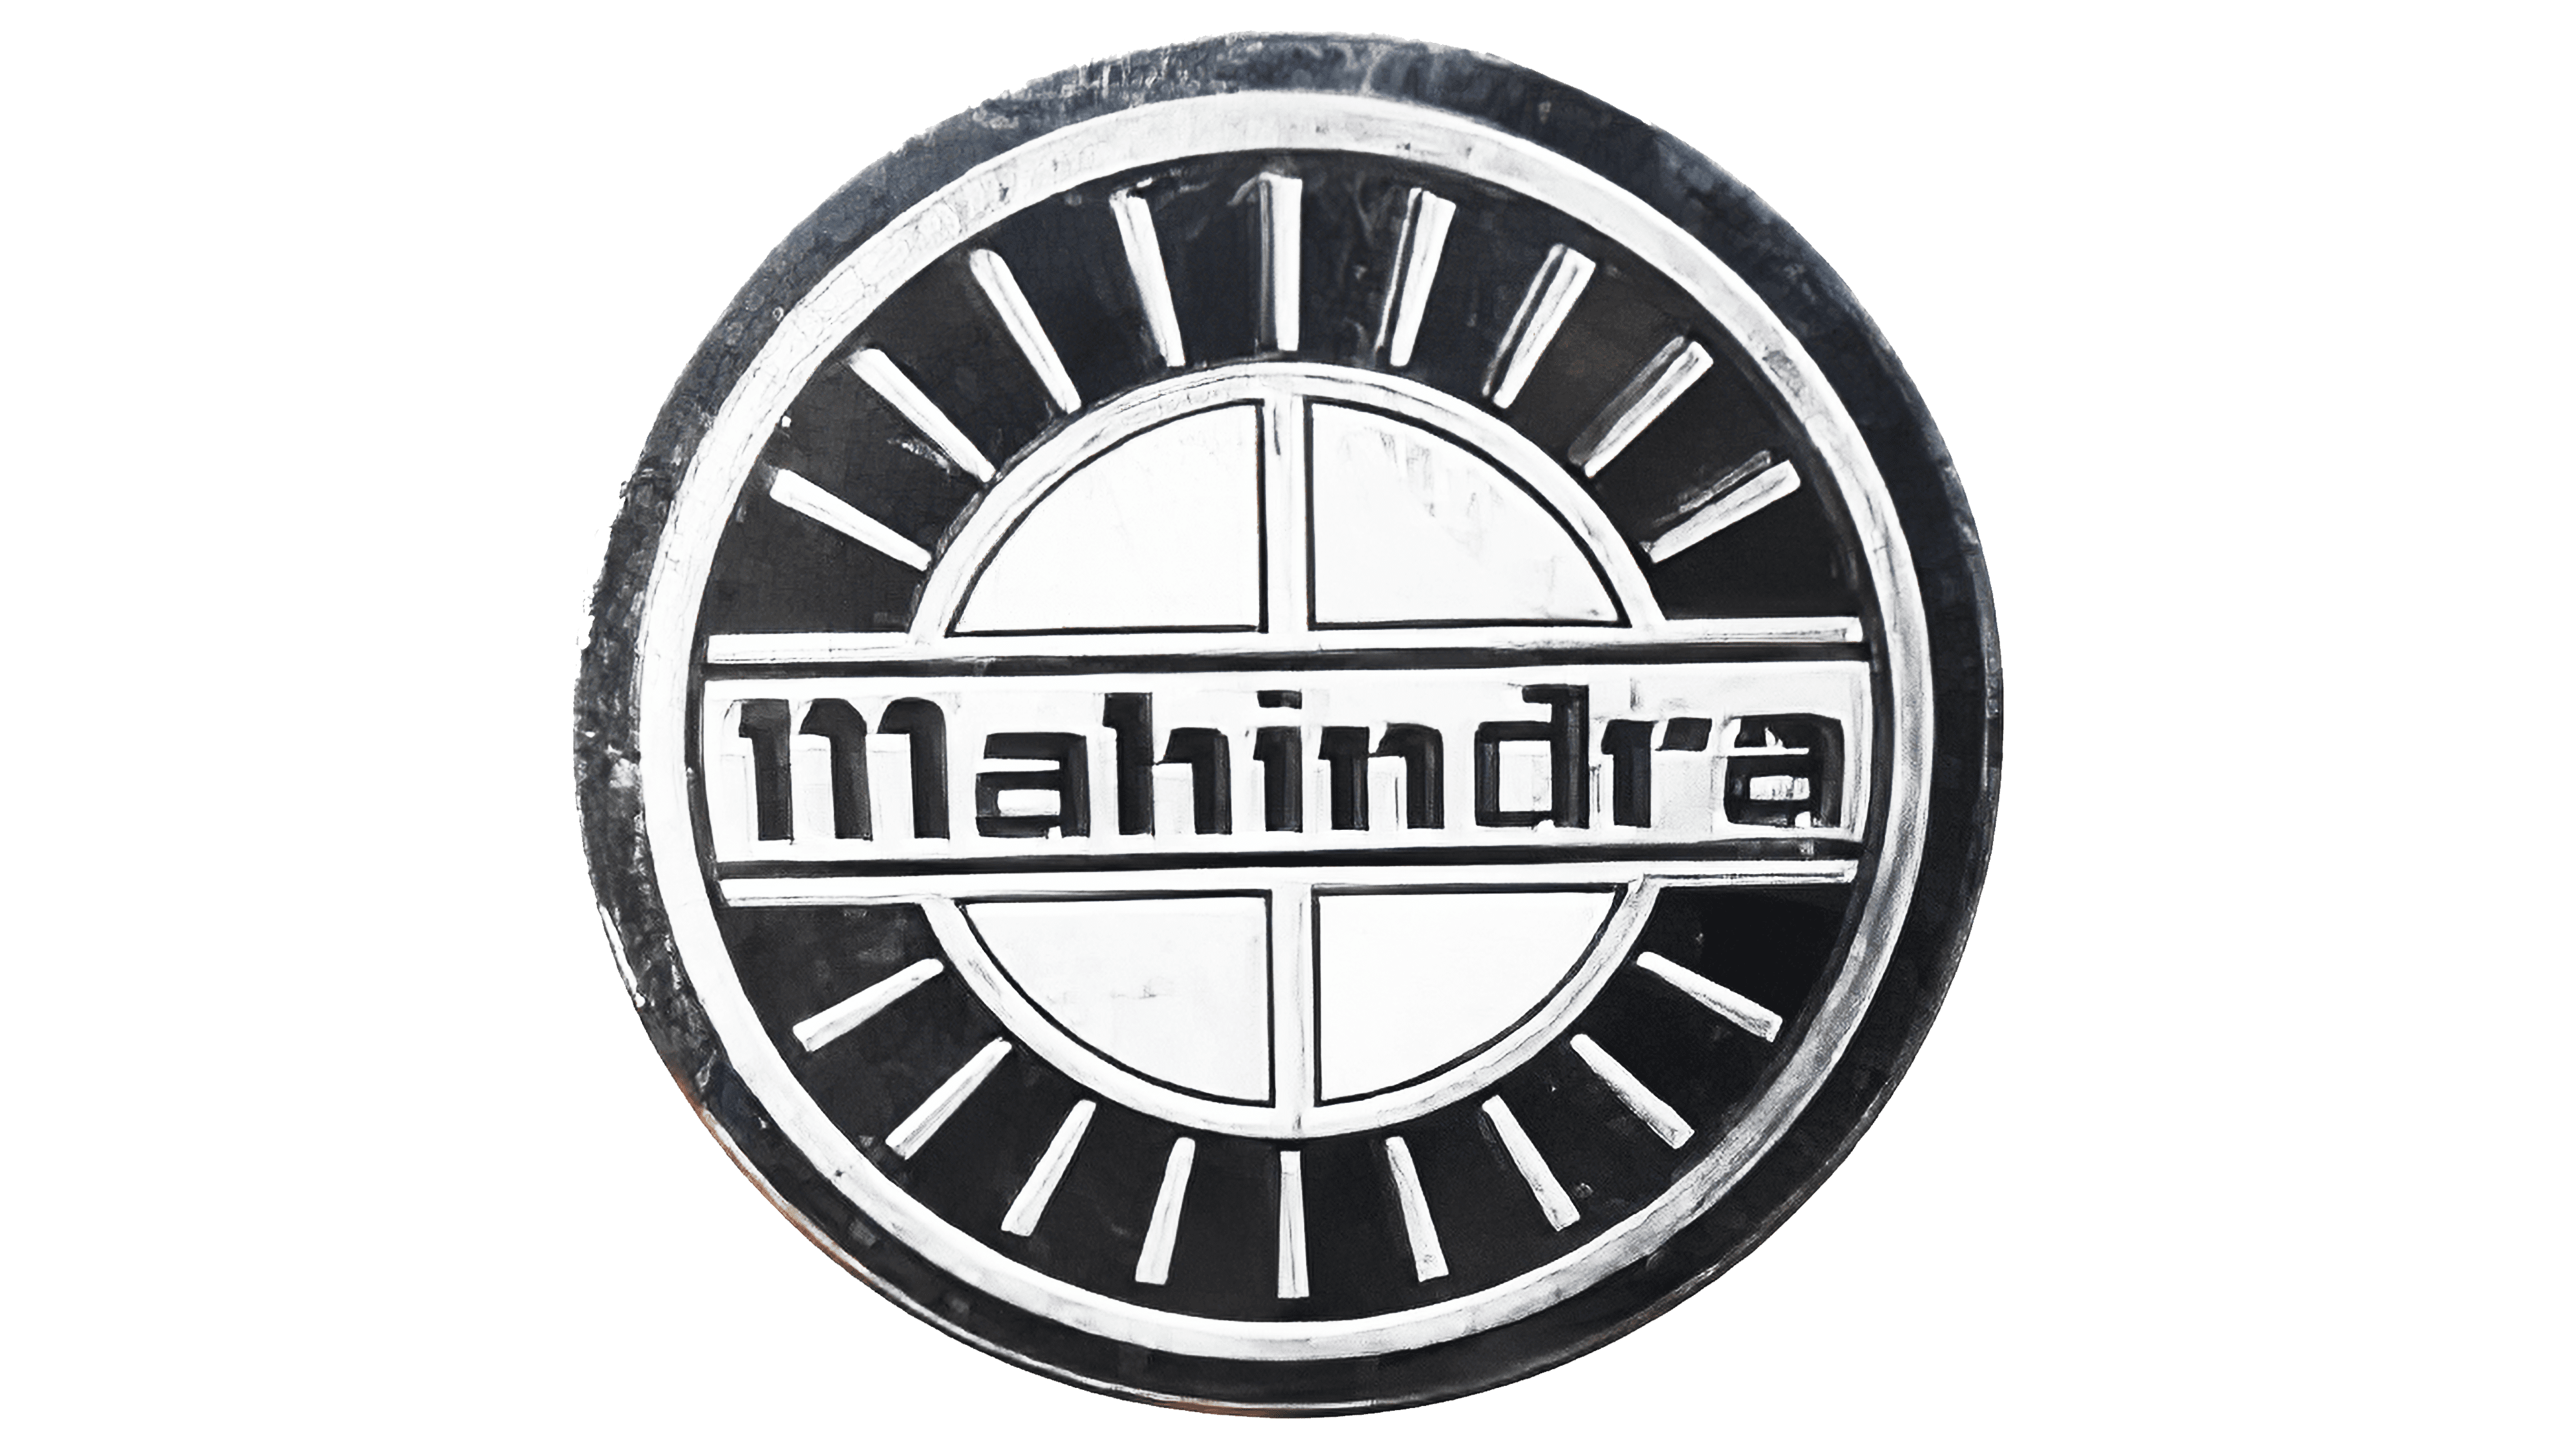 Mahindra & Mahindra Planning to Acquire MG Motor India - Report - Maxabout  News